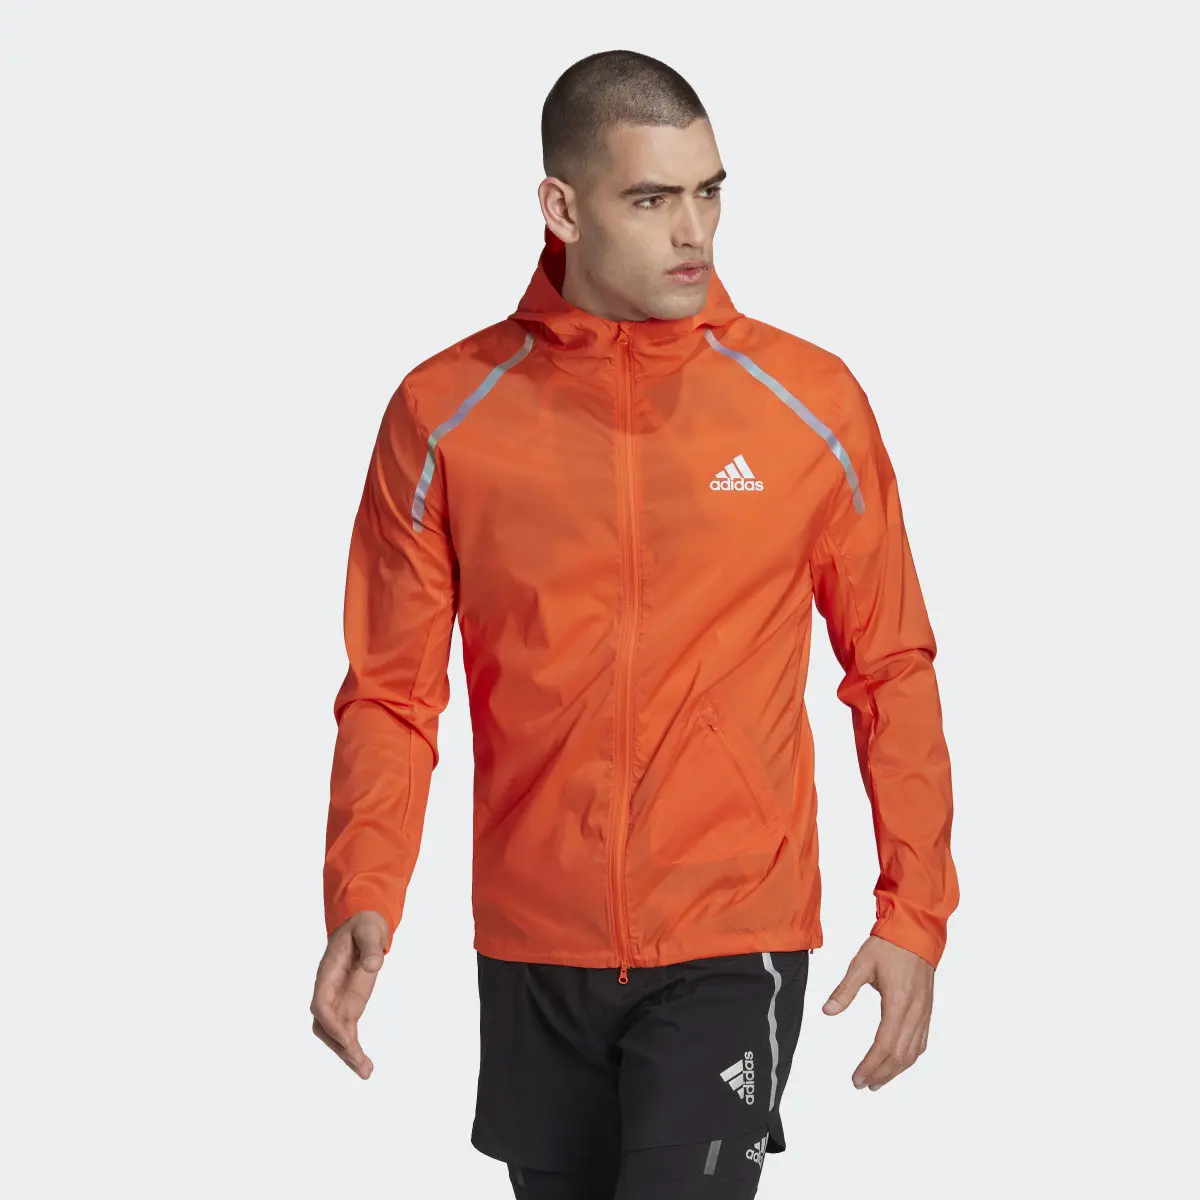 Adidas Marathon Jacket. 2